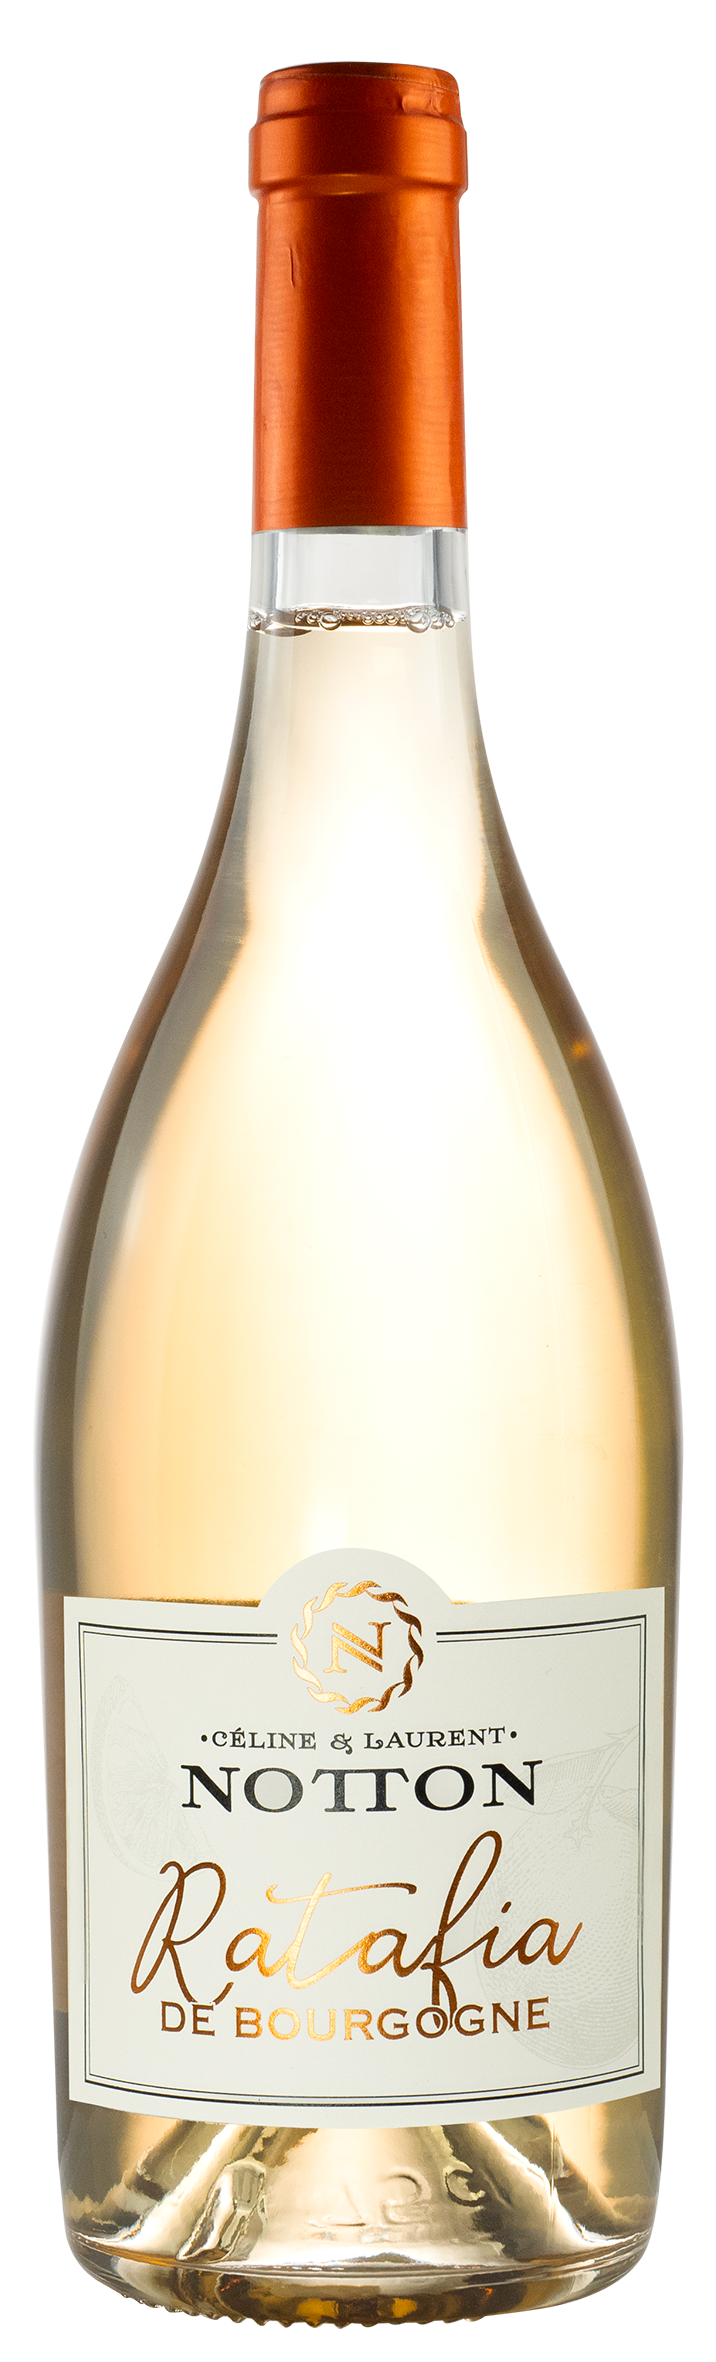 bouteille NOTTON Ratafia de Bourgogne orange